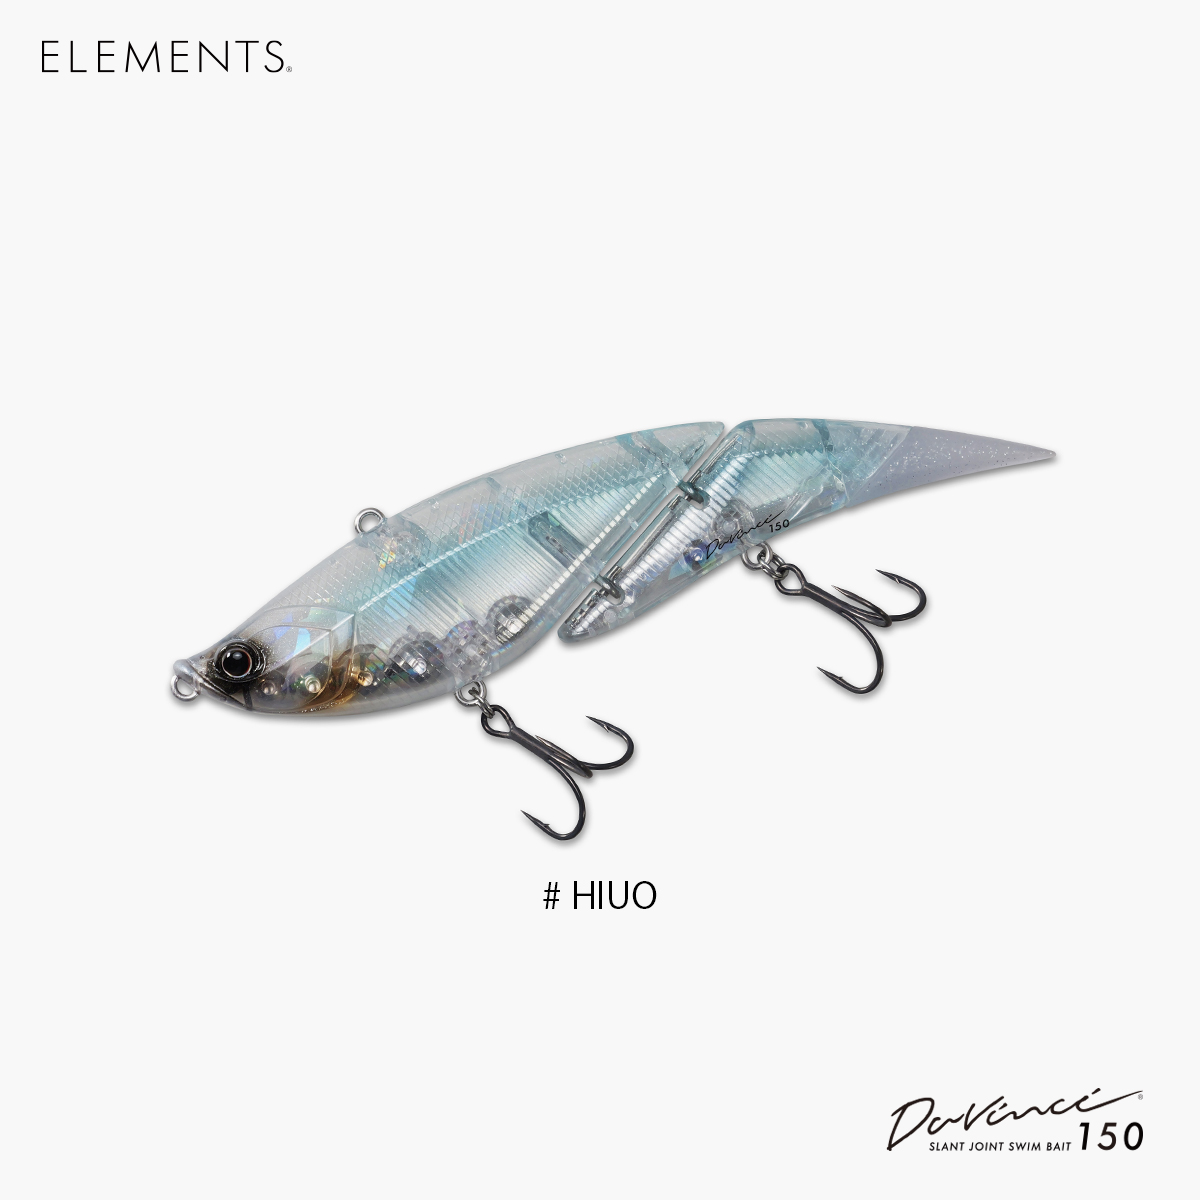 Davinci150 – ELEMENTS®